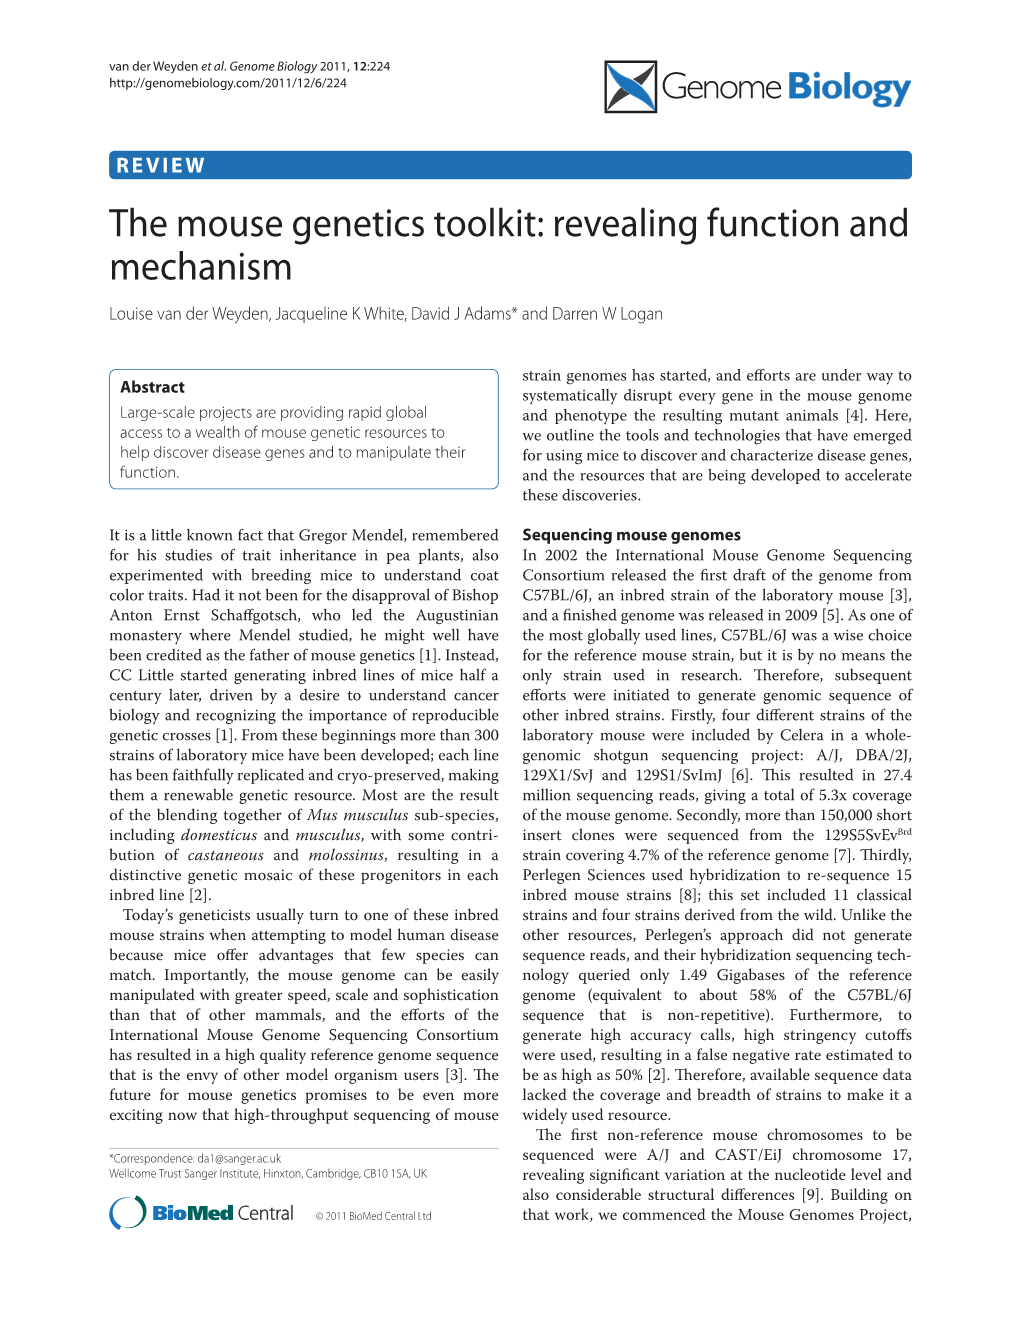 The Mouse Genetics Toolkit: Revealing Function and Mechanism Louise Van Der Weyden, Jacqueline K White, David J Adams* and Darren W Logan